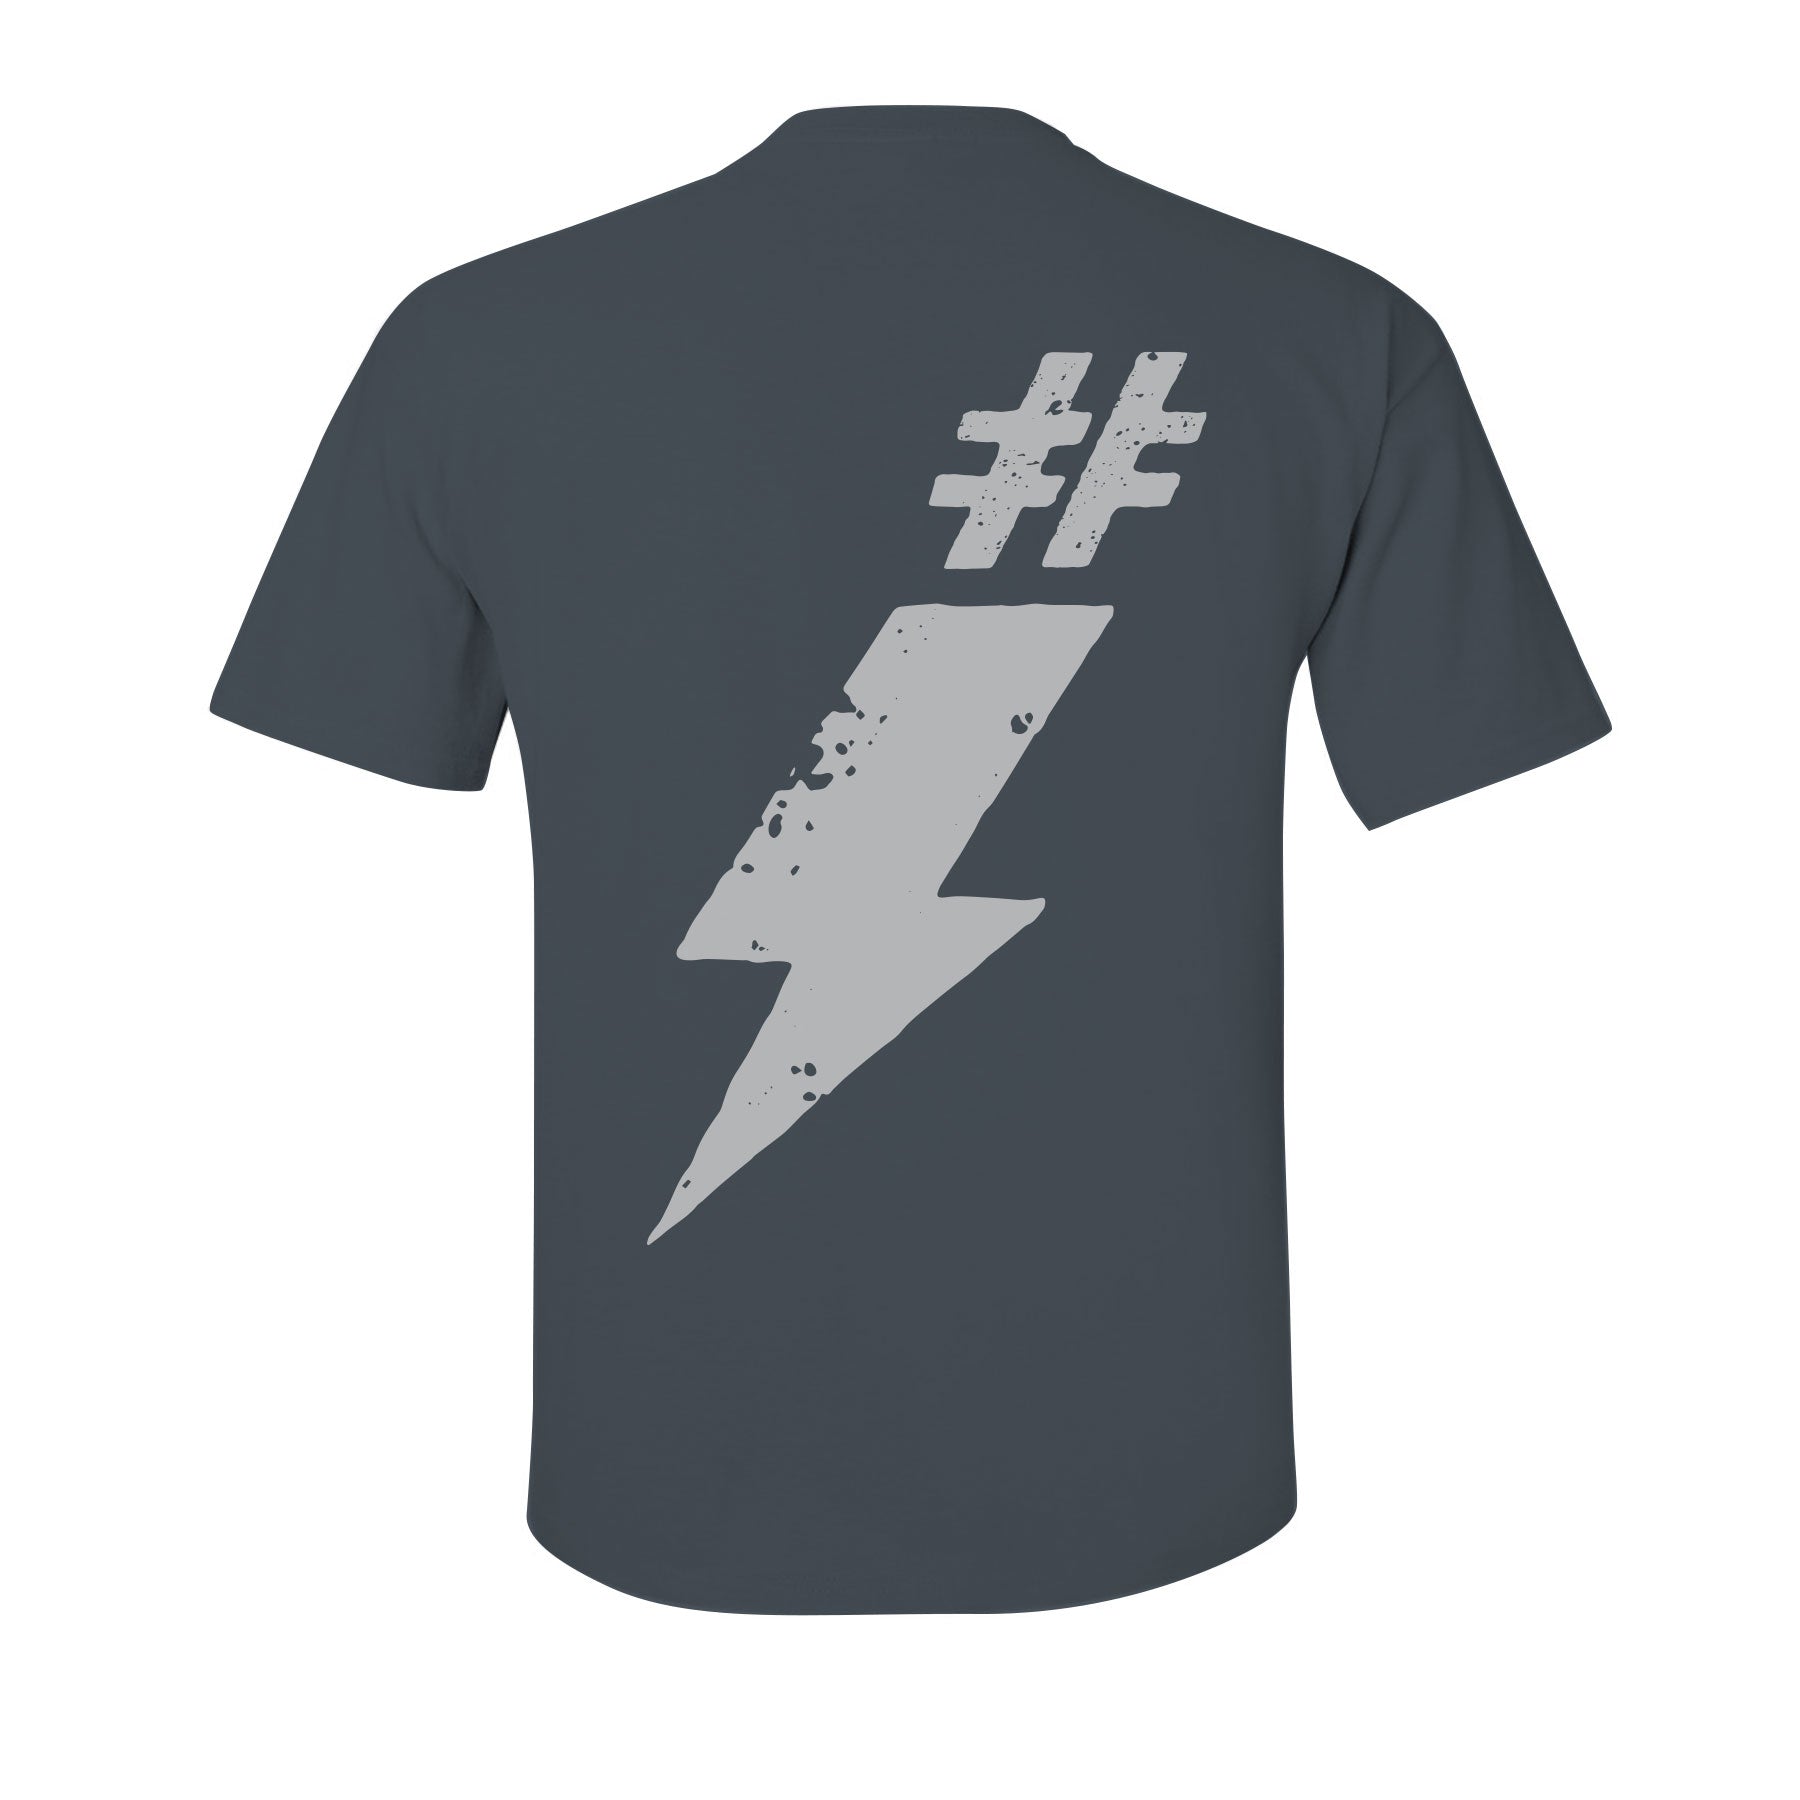 Happy Propaganda graphite grey t-shirt with white hashtag and bolt